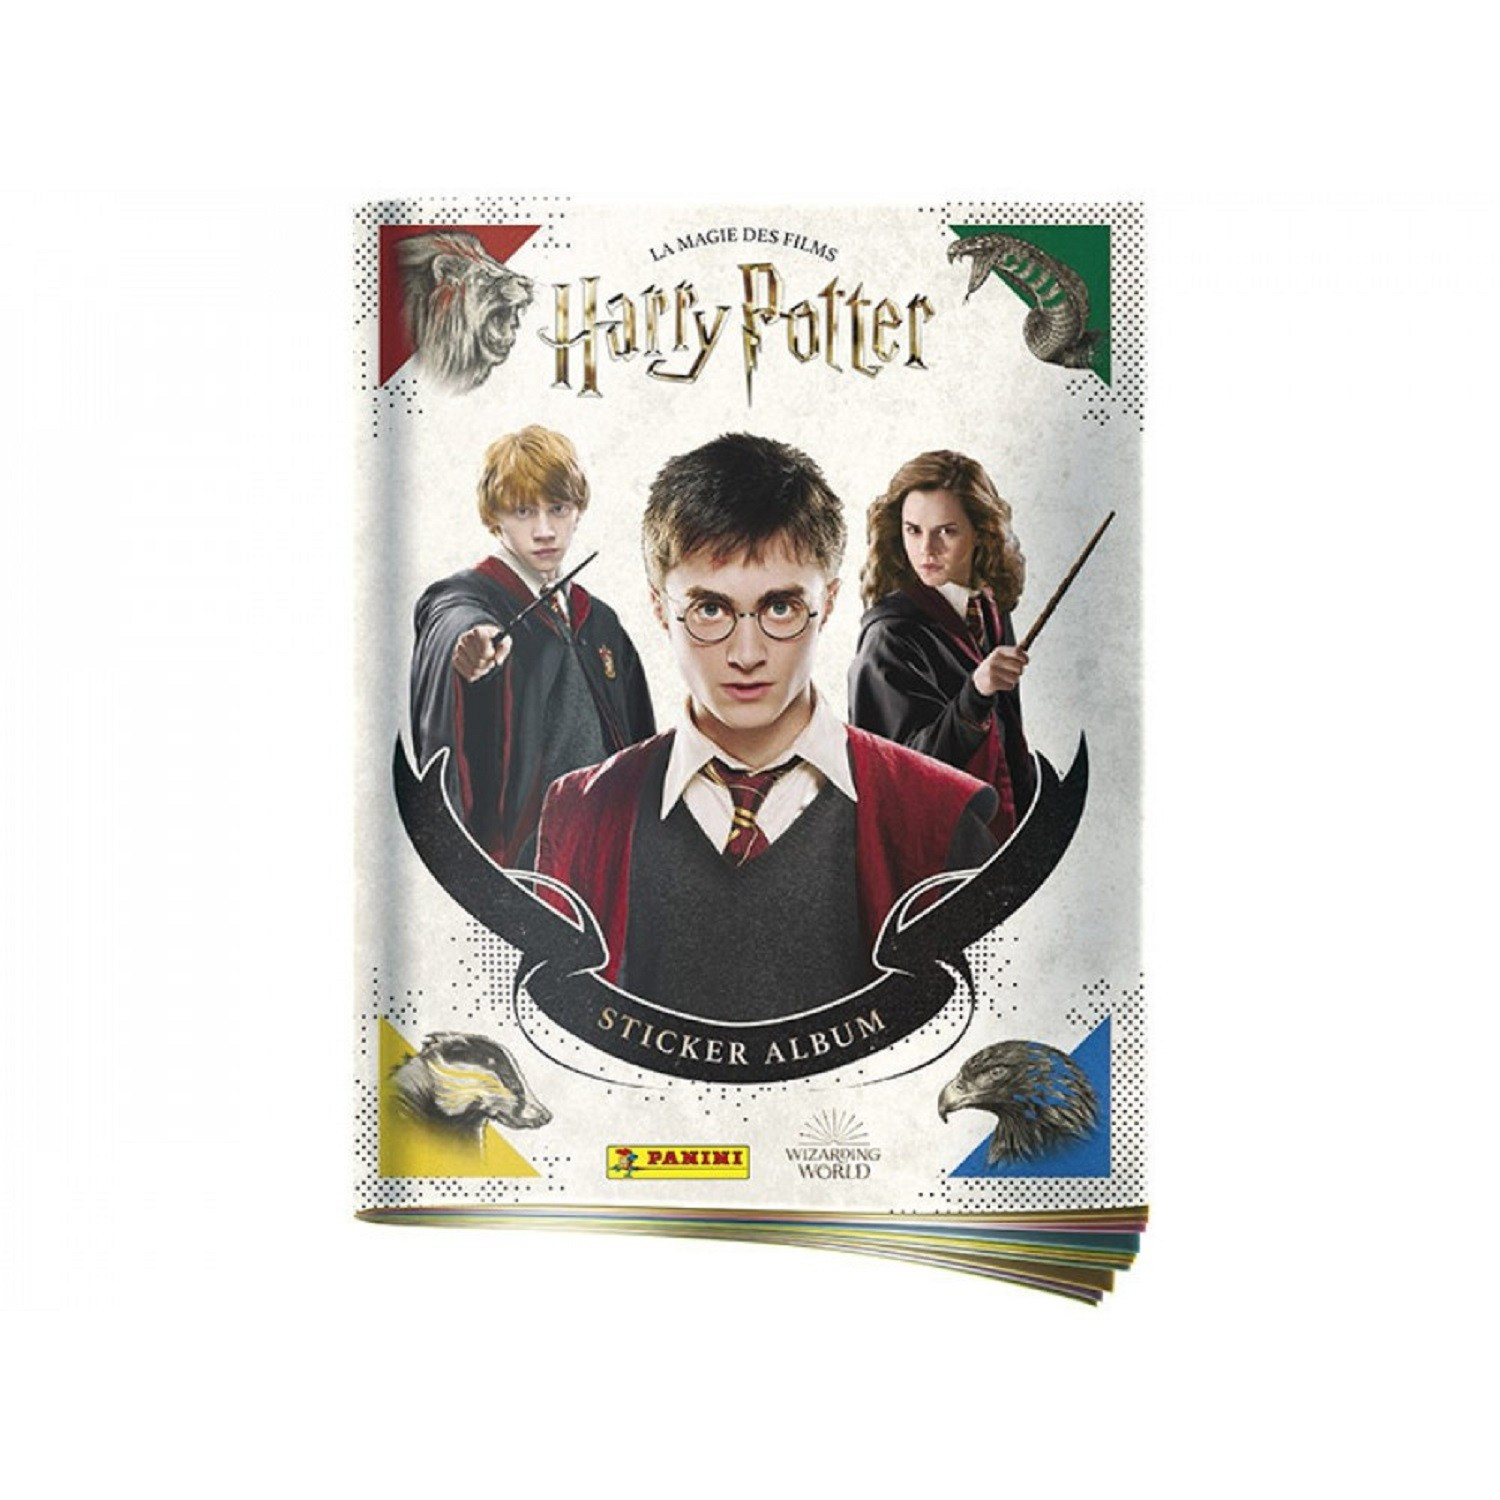 Album Porte-cartes Harry Potter - PANINI - 78330012619 